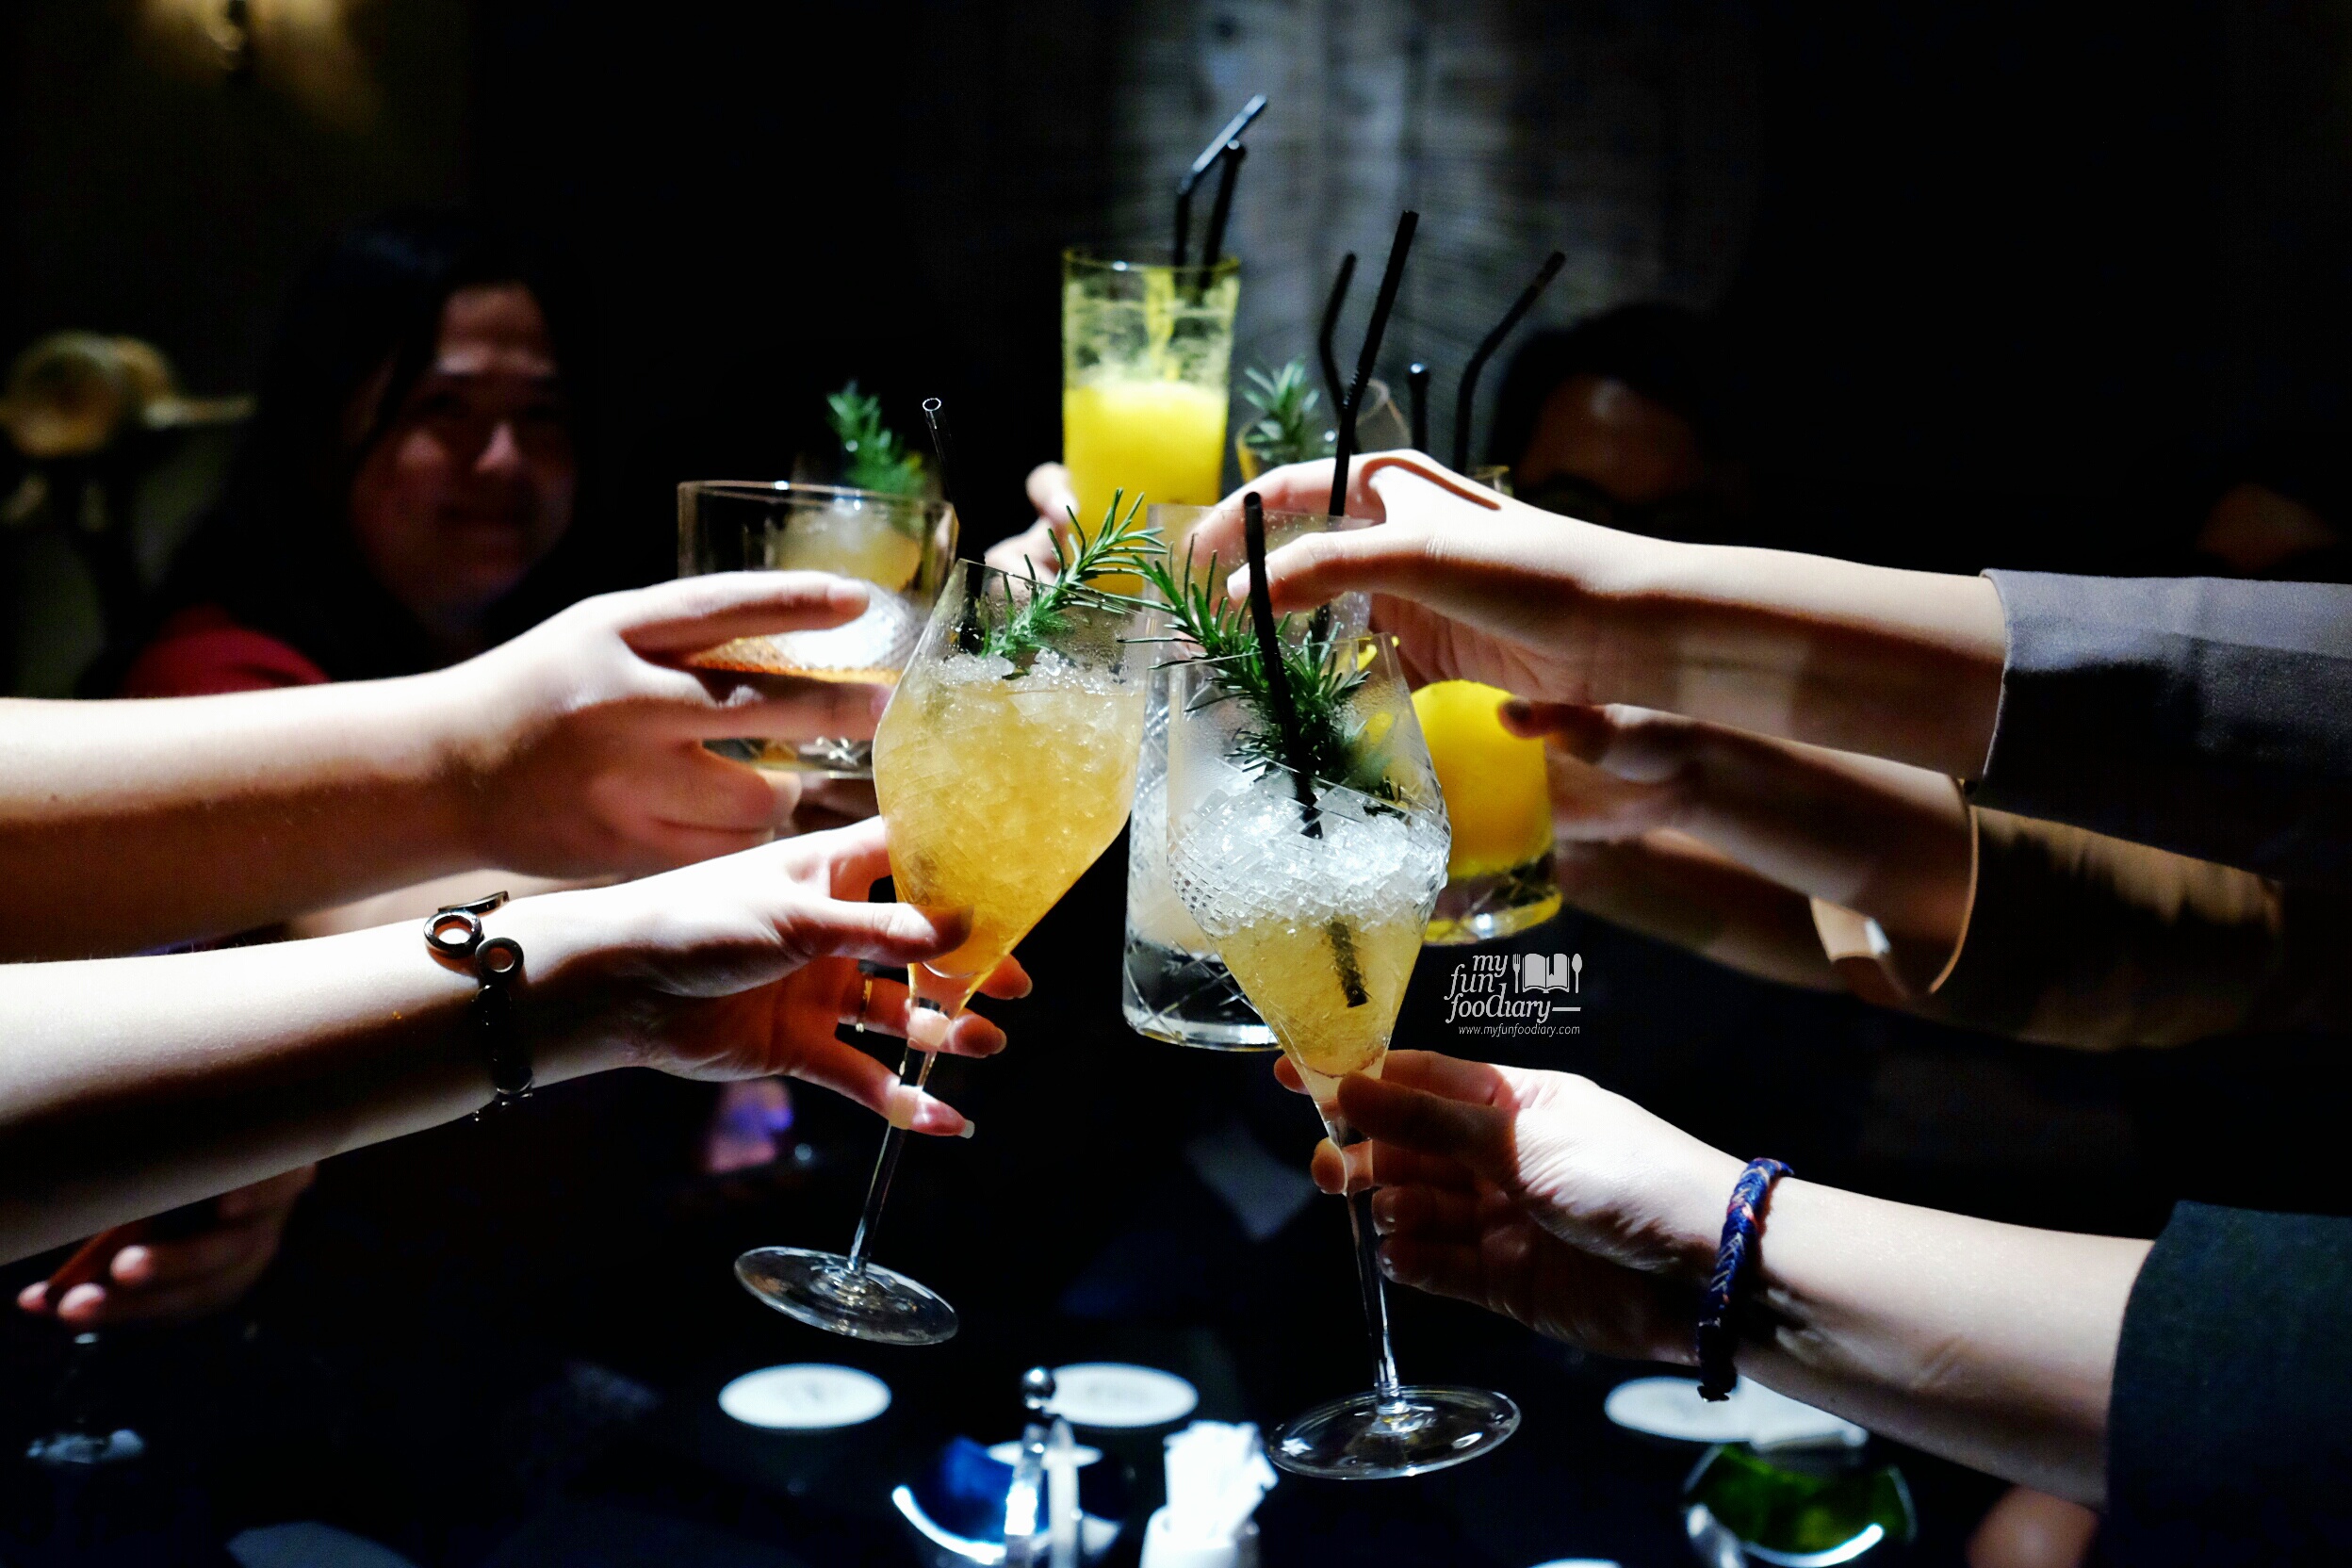 Cheers at Barong Bar Fairmont Jakarta by Myfunfoodiary